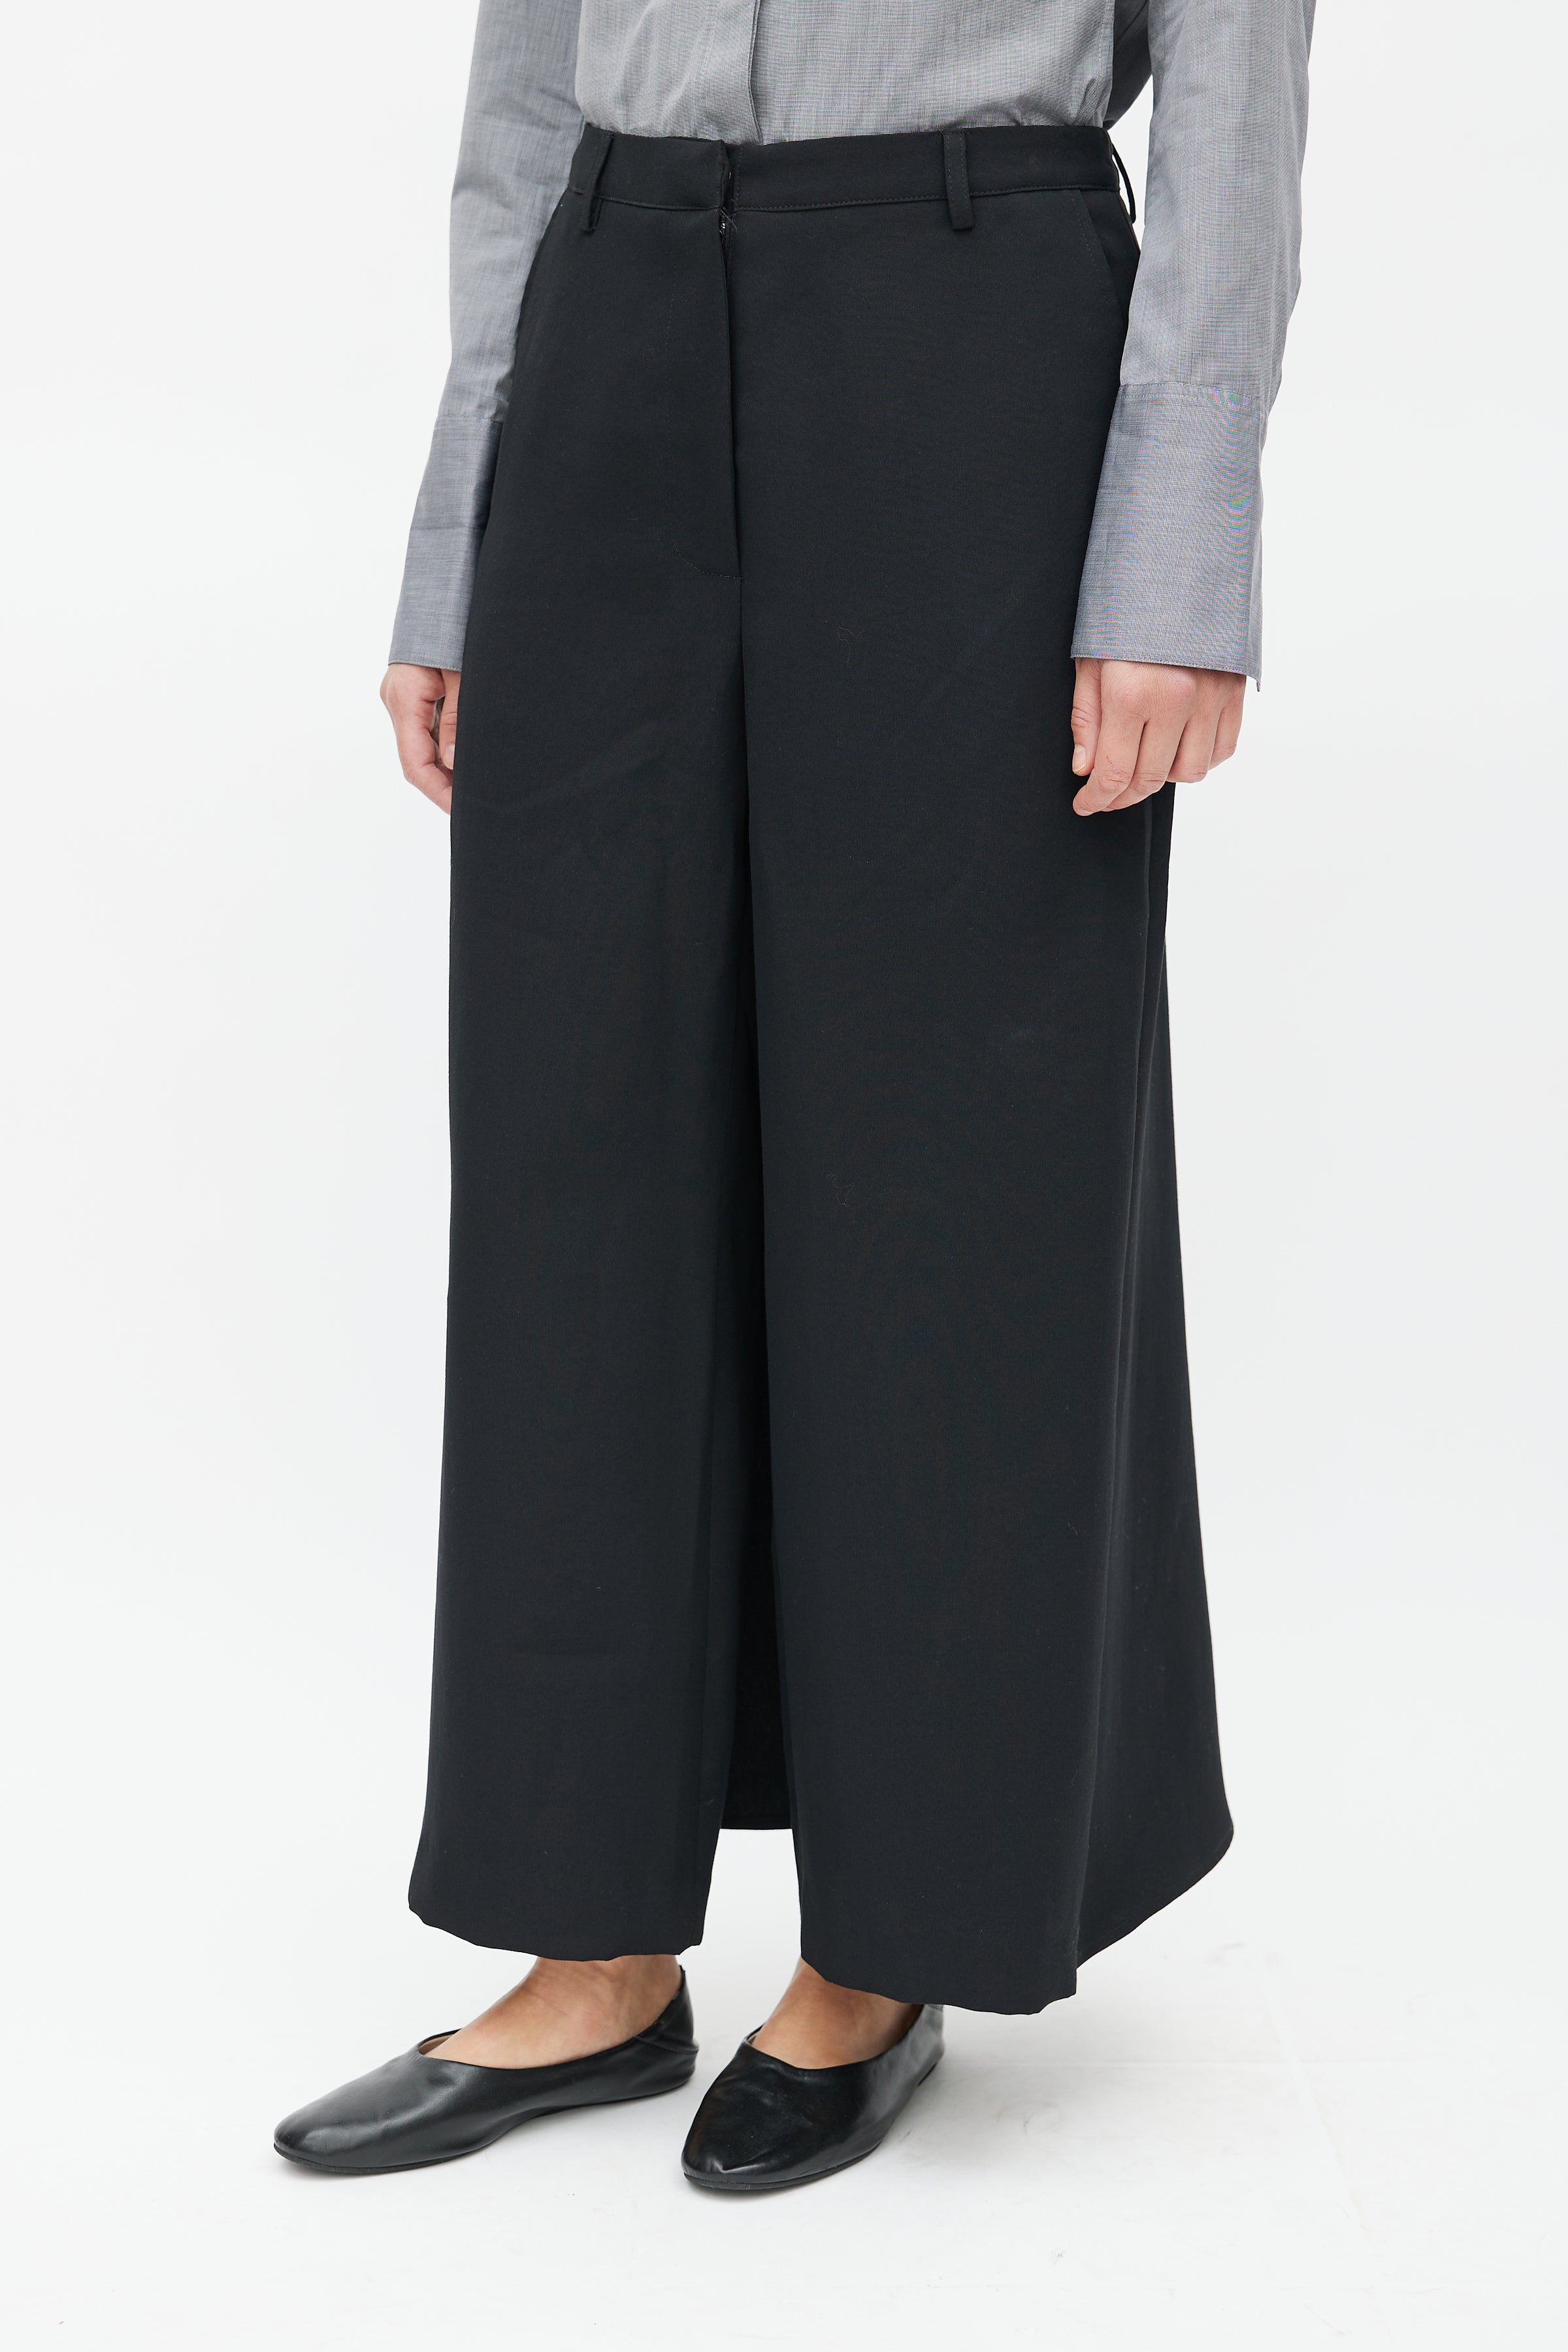 Black Pants with Skirt Overlay